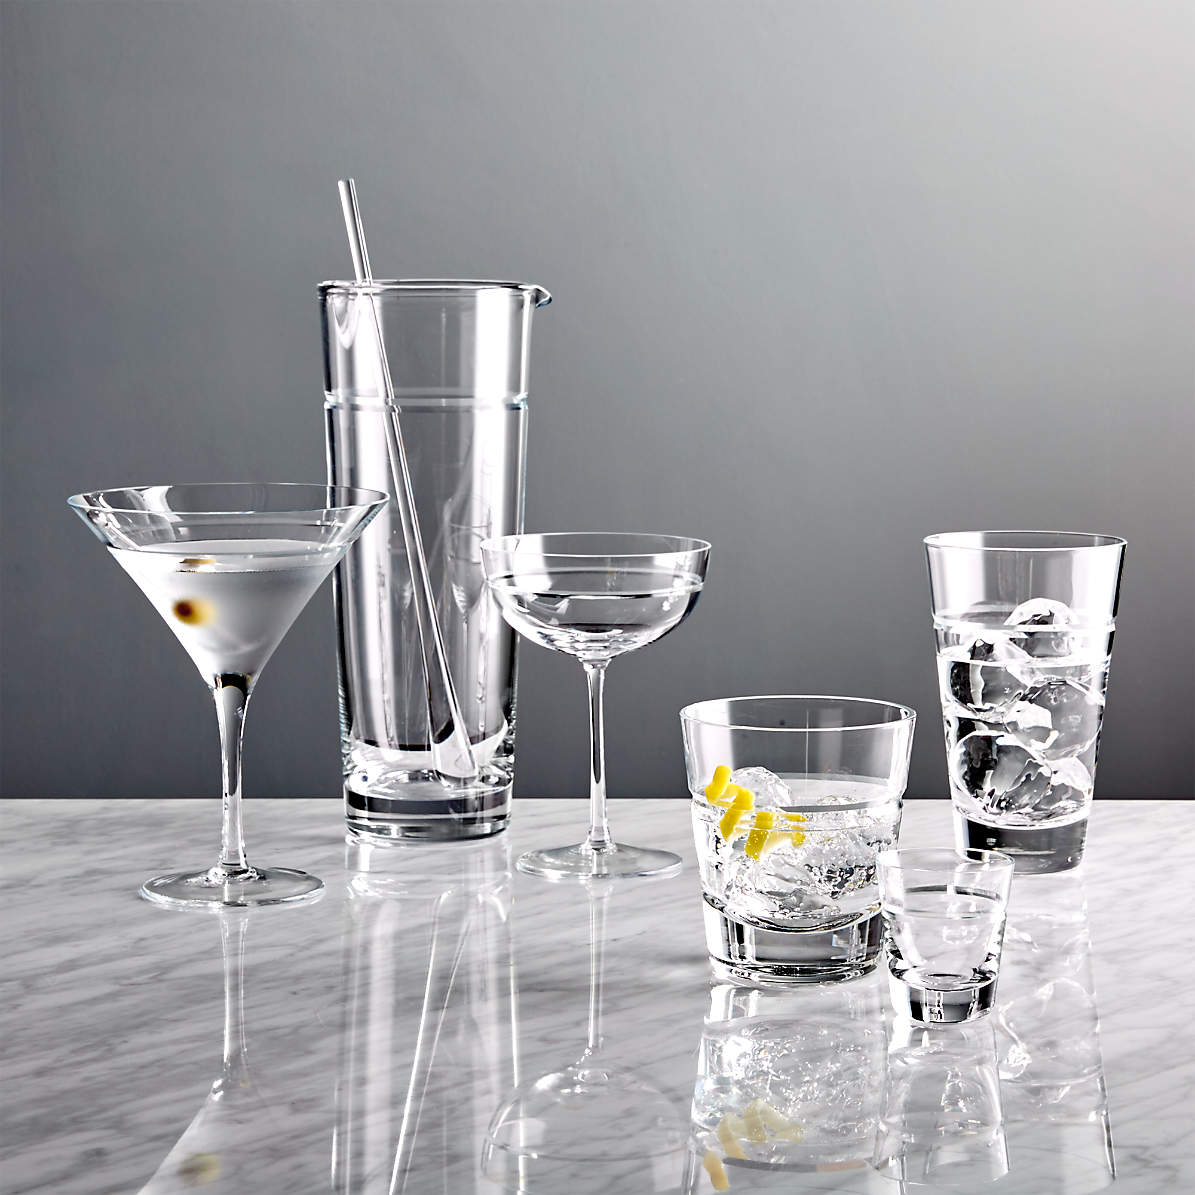 Callaway 12-Oz. Martini Glass + Reviews